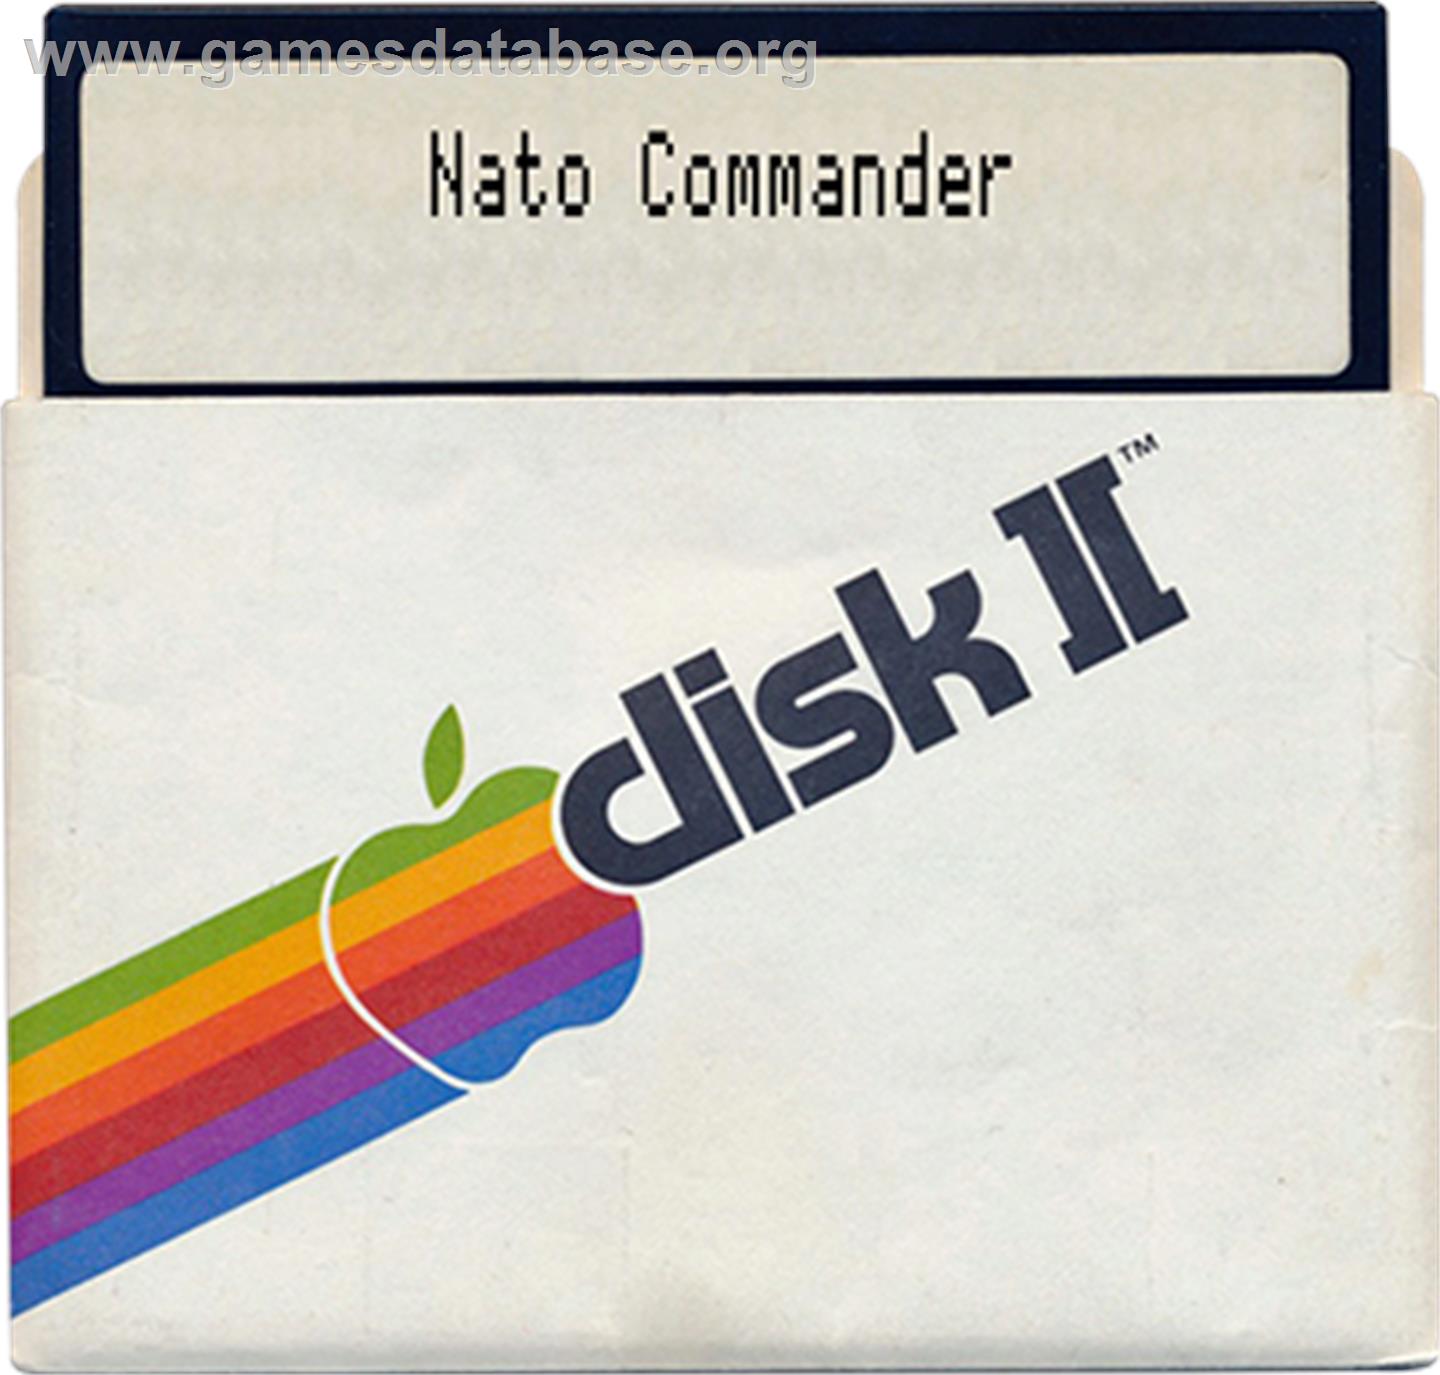 NATO Commander - Apple II - Artwork - Disc